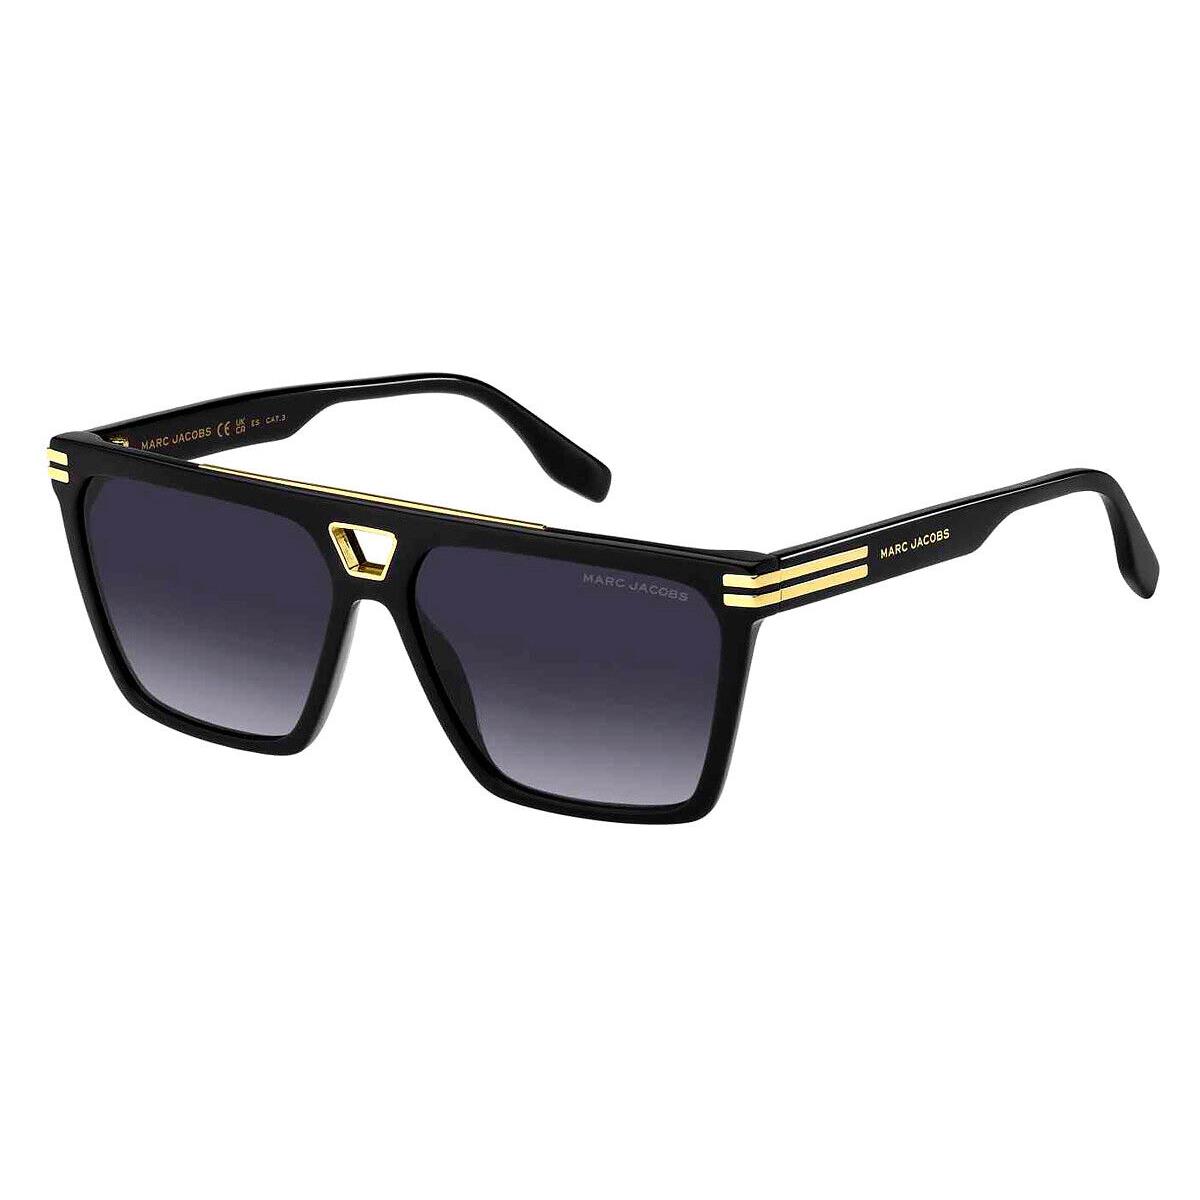 Marc Jacobs Mjb Sunglasses Men Black / Gray Shaded 58mm